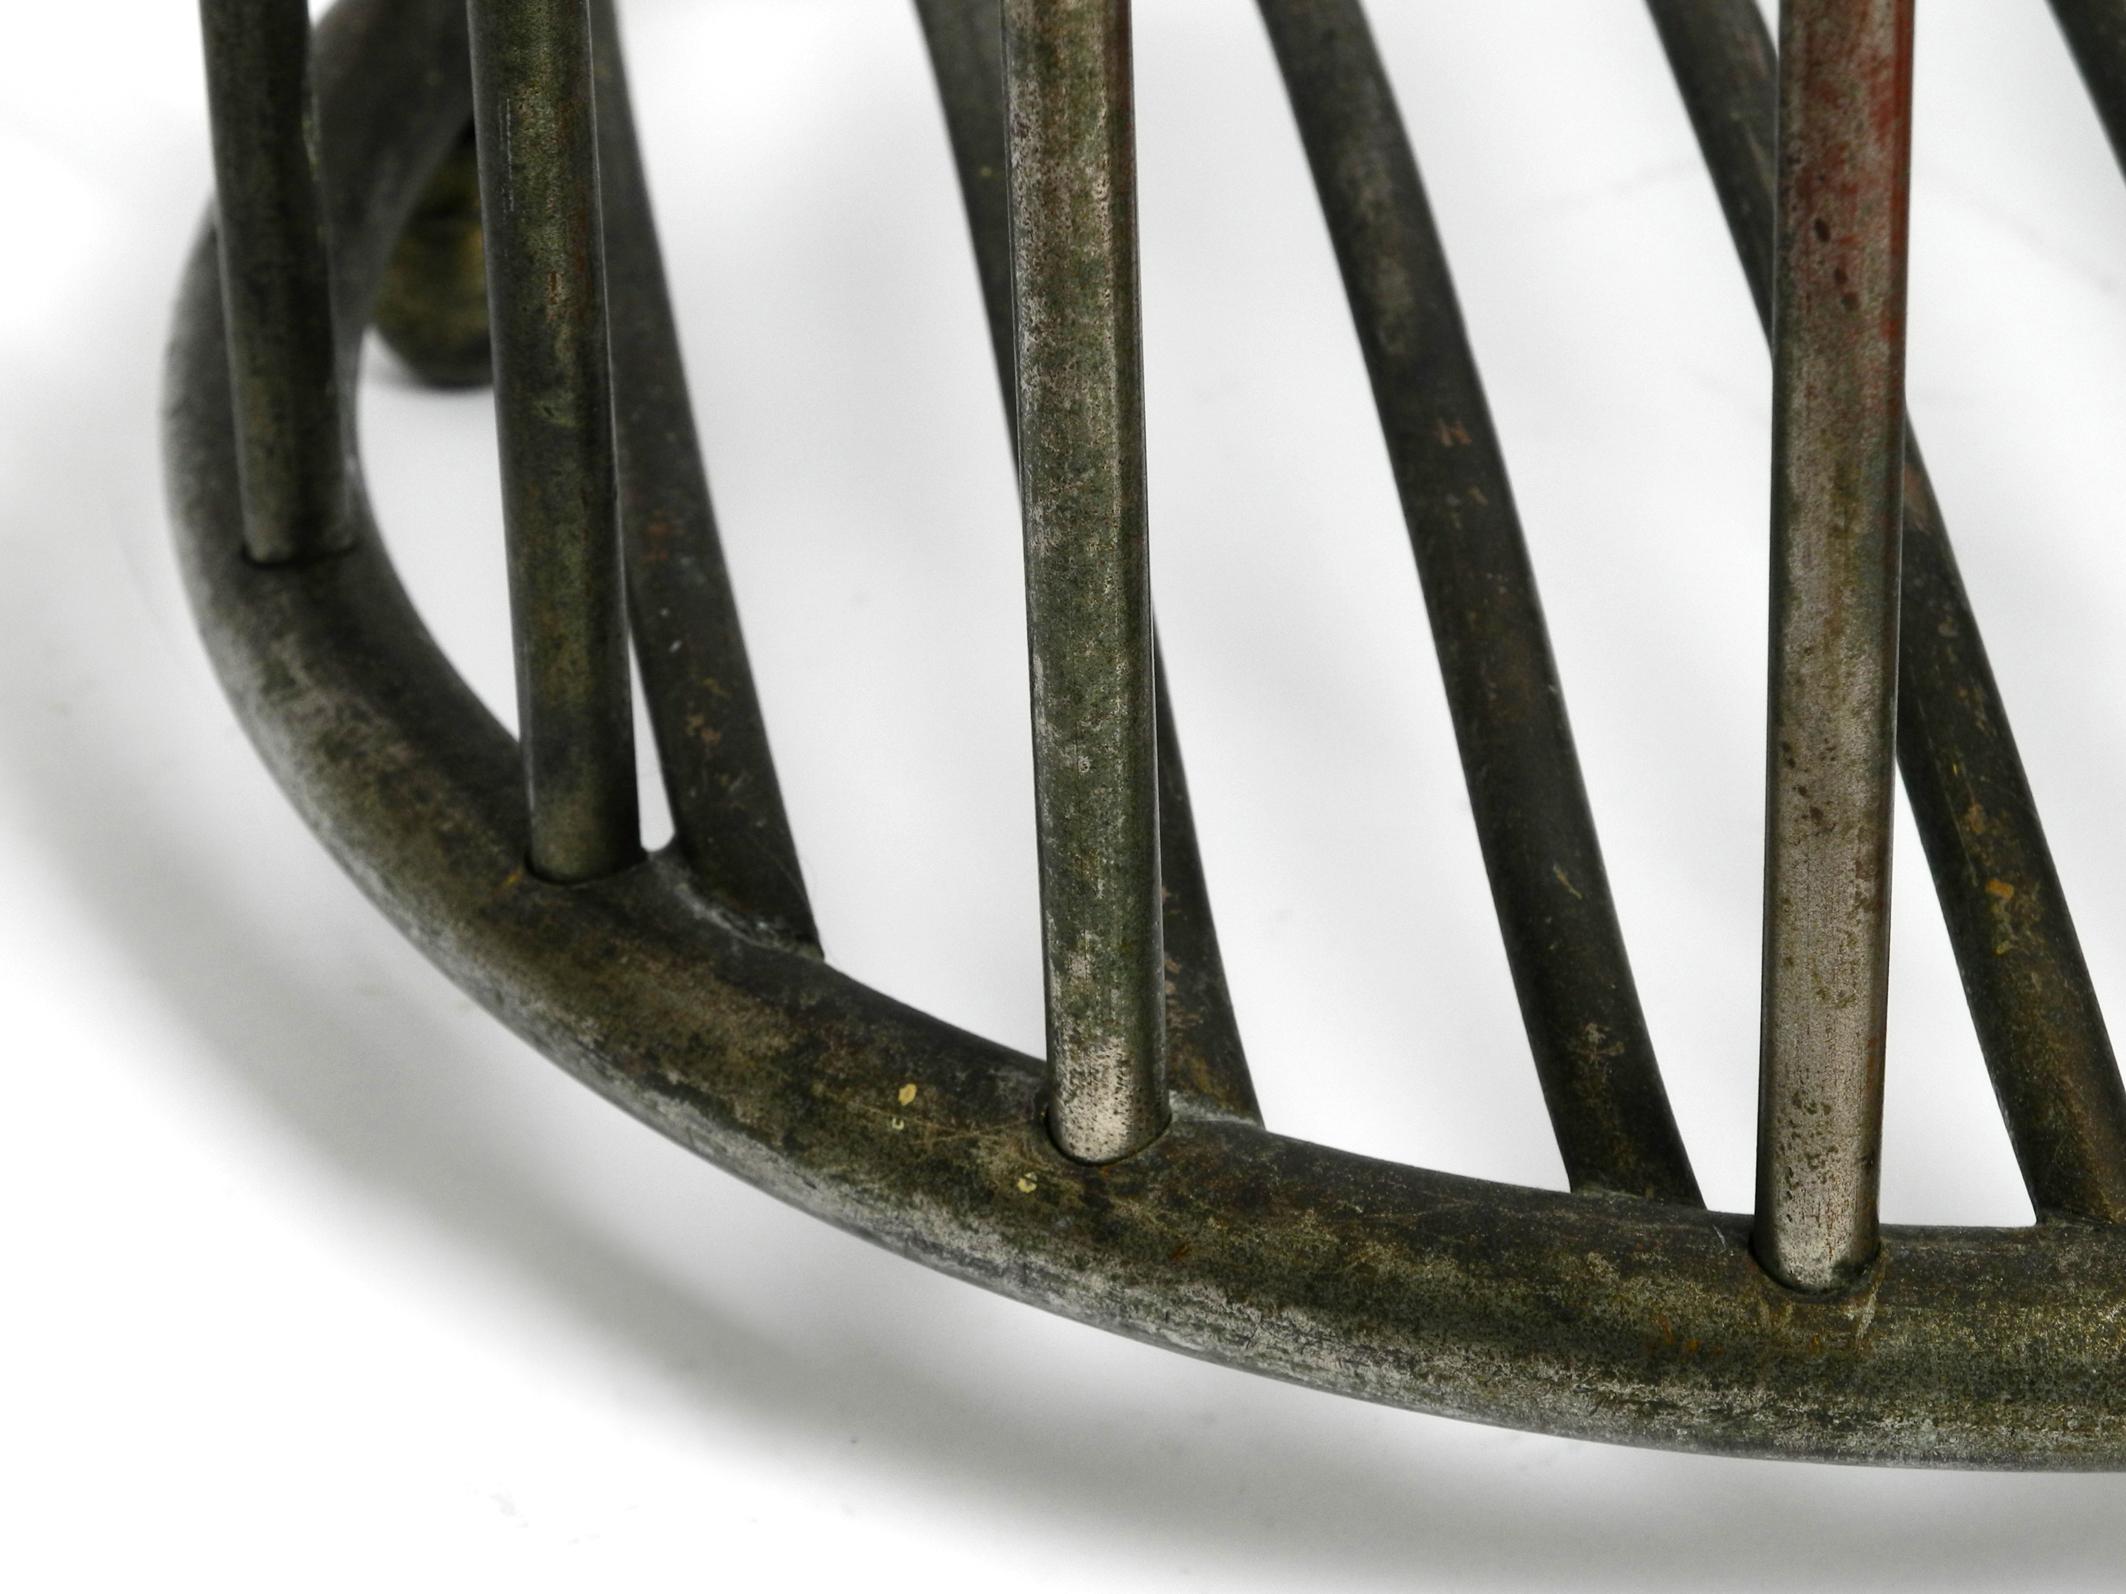 Original Mott's Plumbing Towel Basket Made of Nickel-Plated Brass from the 1910s 12